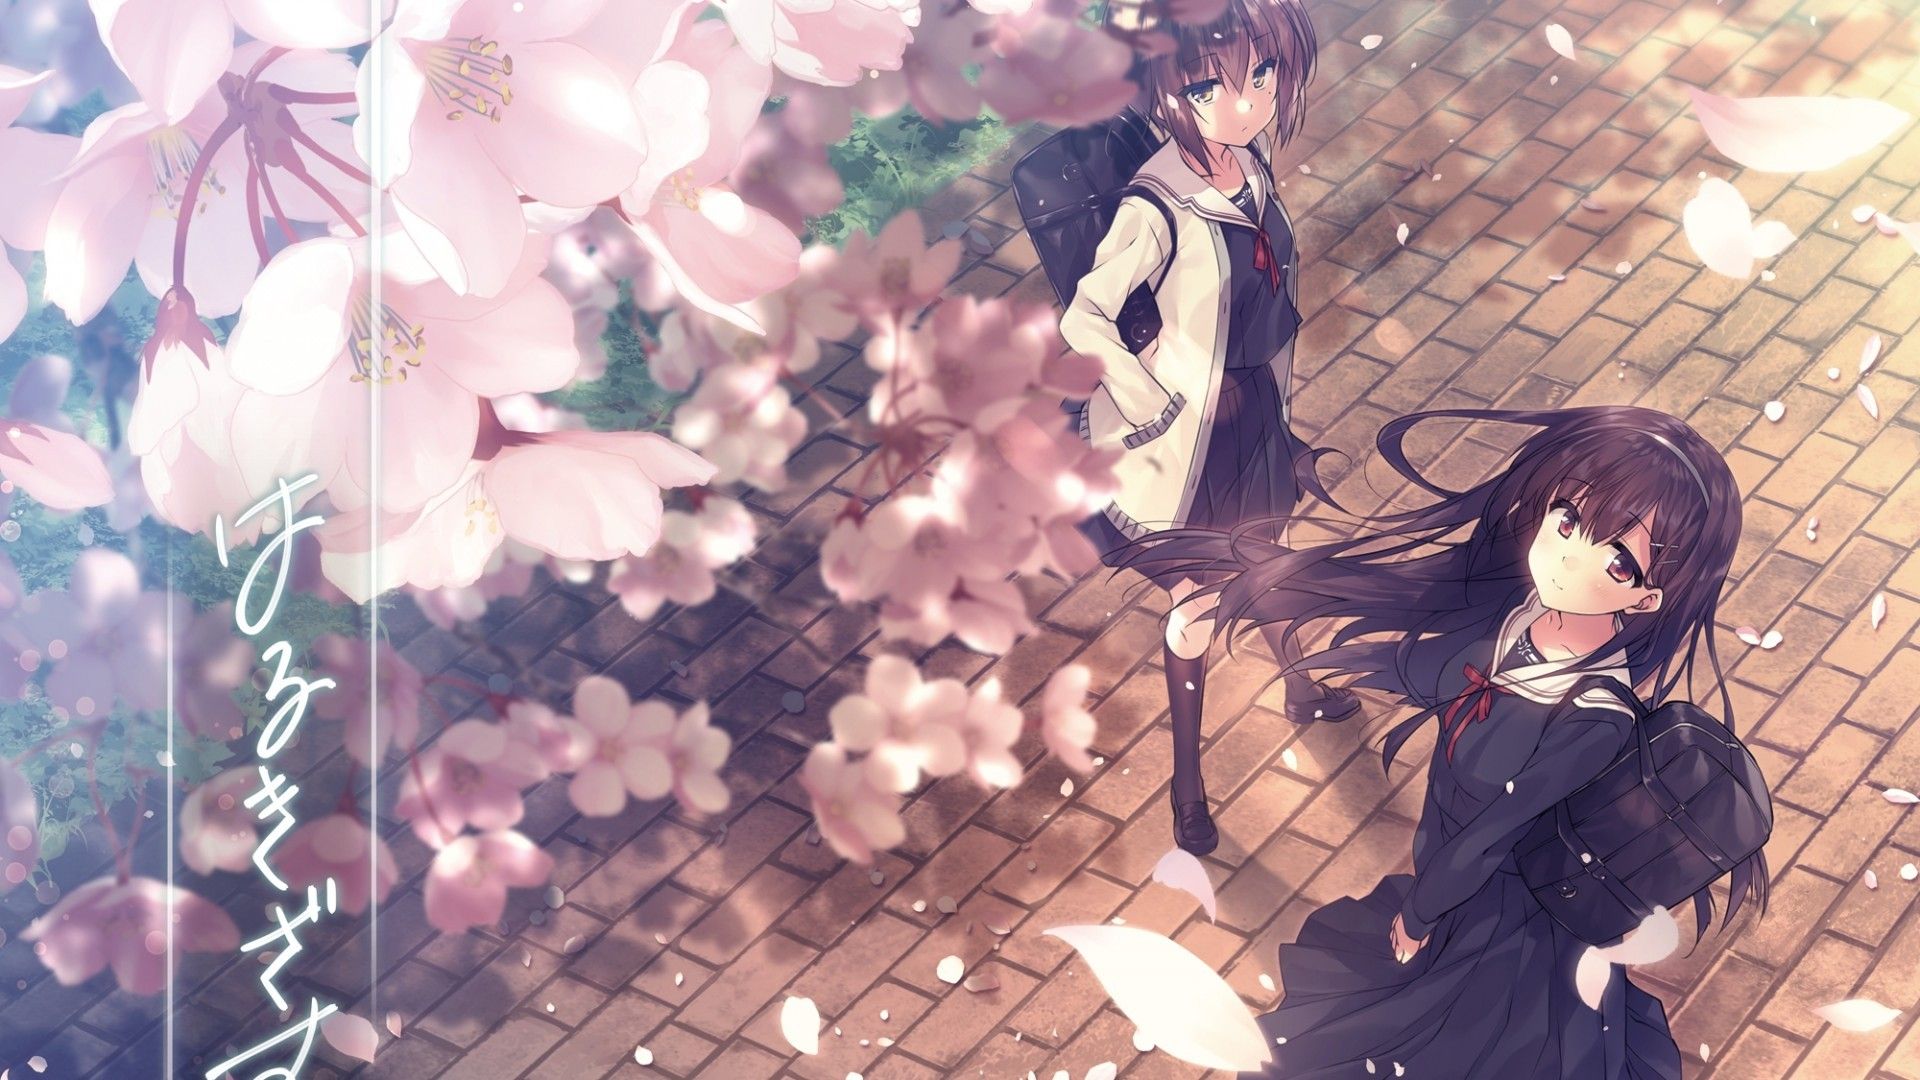 Download 1920x1080 Sakura Blossom, Spring, Anime Girls, School Uniform, Bag, Wind Wallpaper for Widescreen